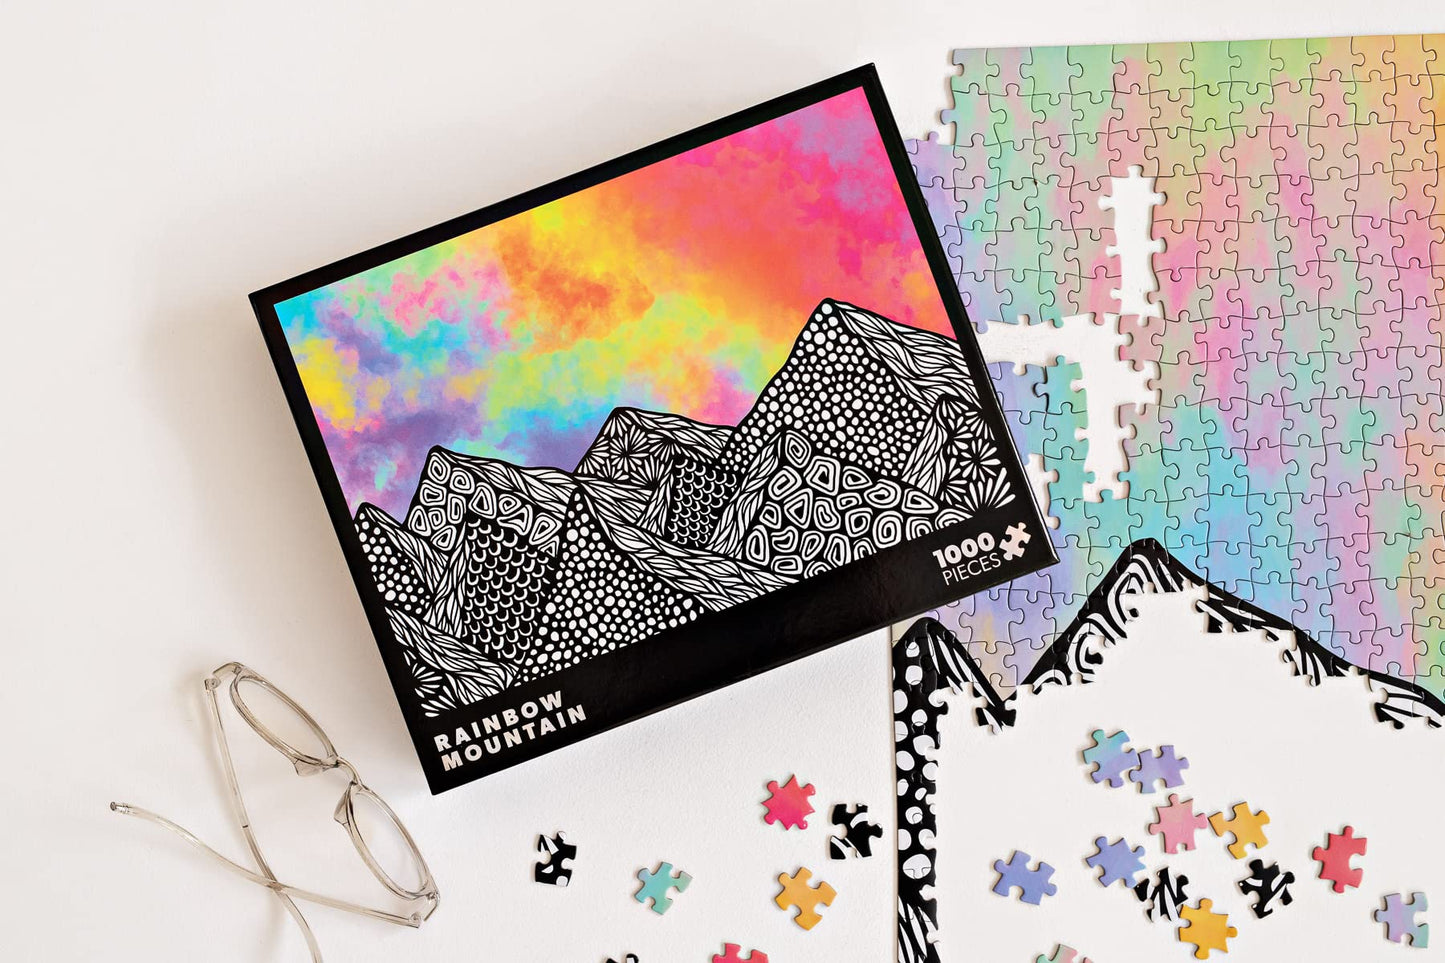 Rainbow Mountain: A Zenspire 1000-Piece Puzzle